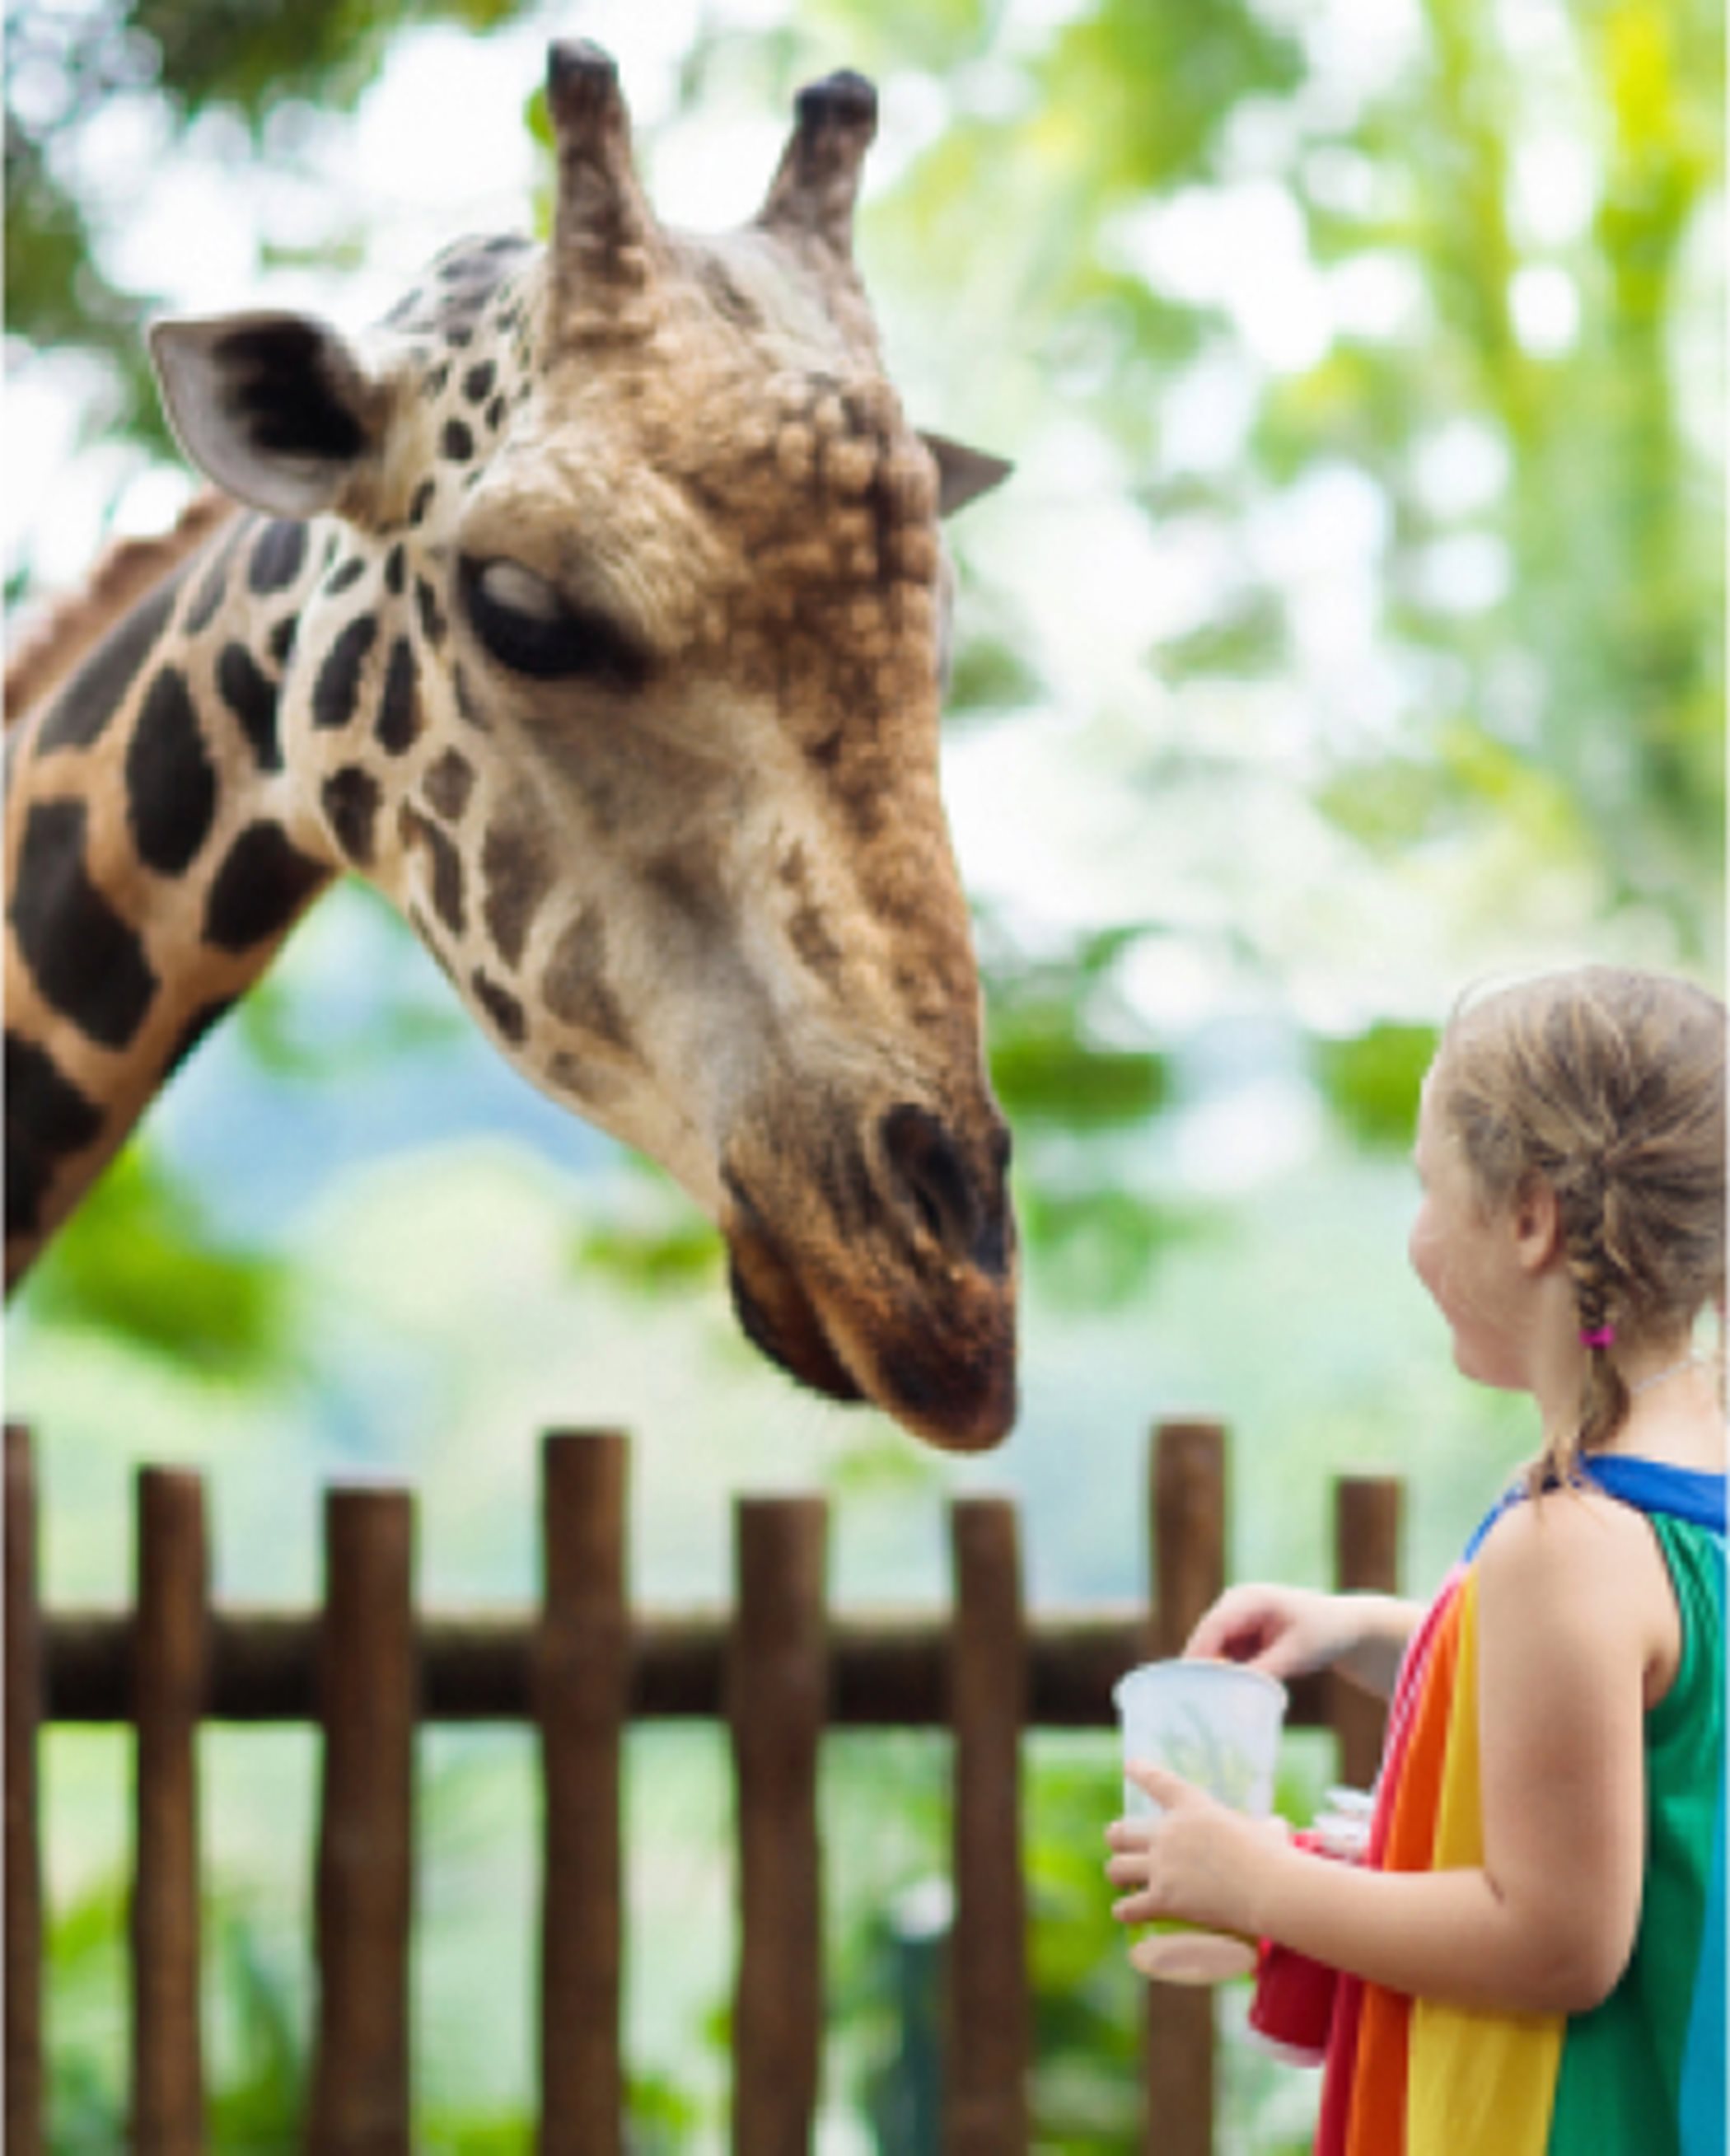 Child with giraffe